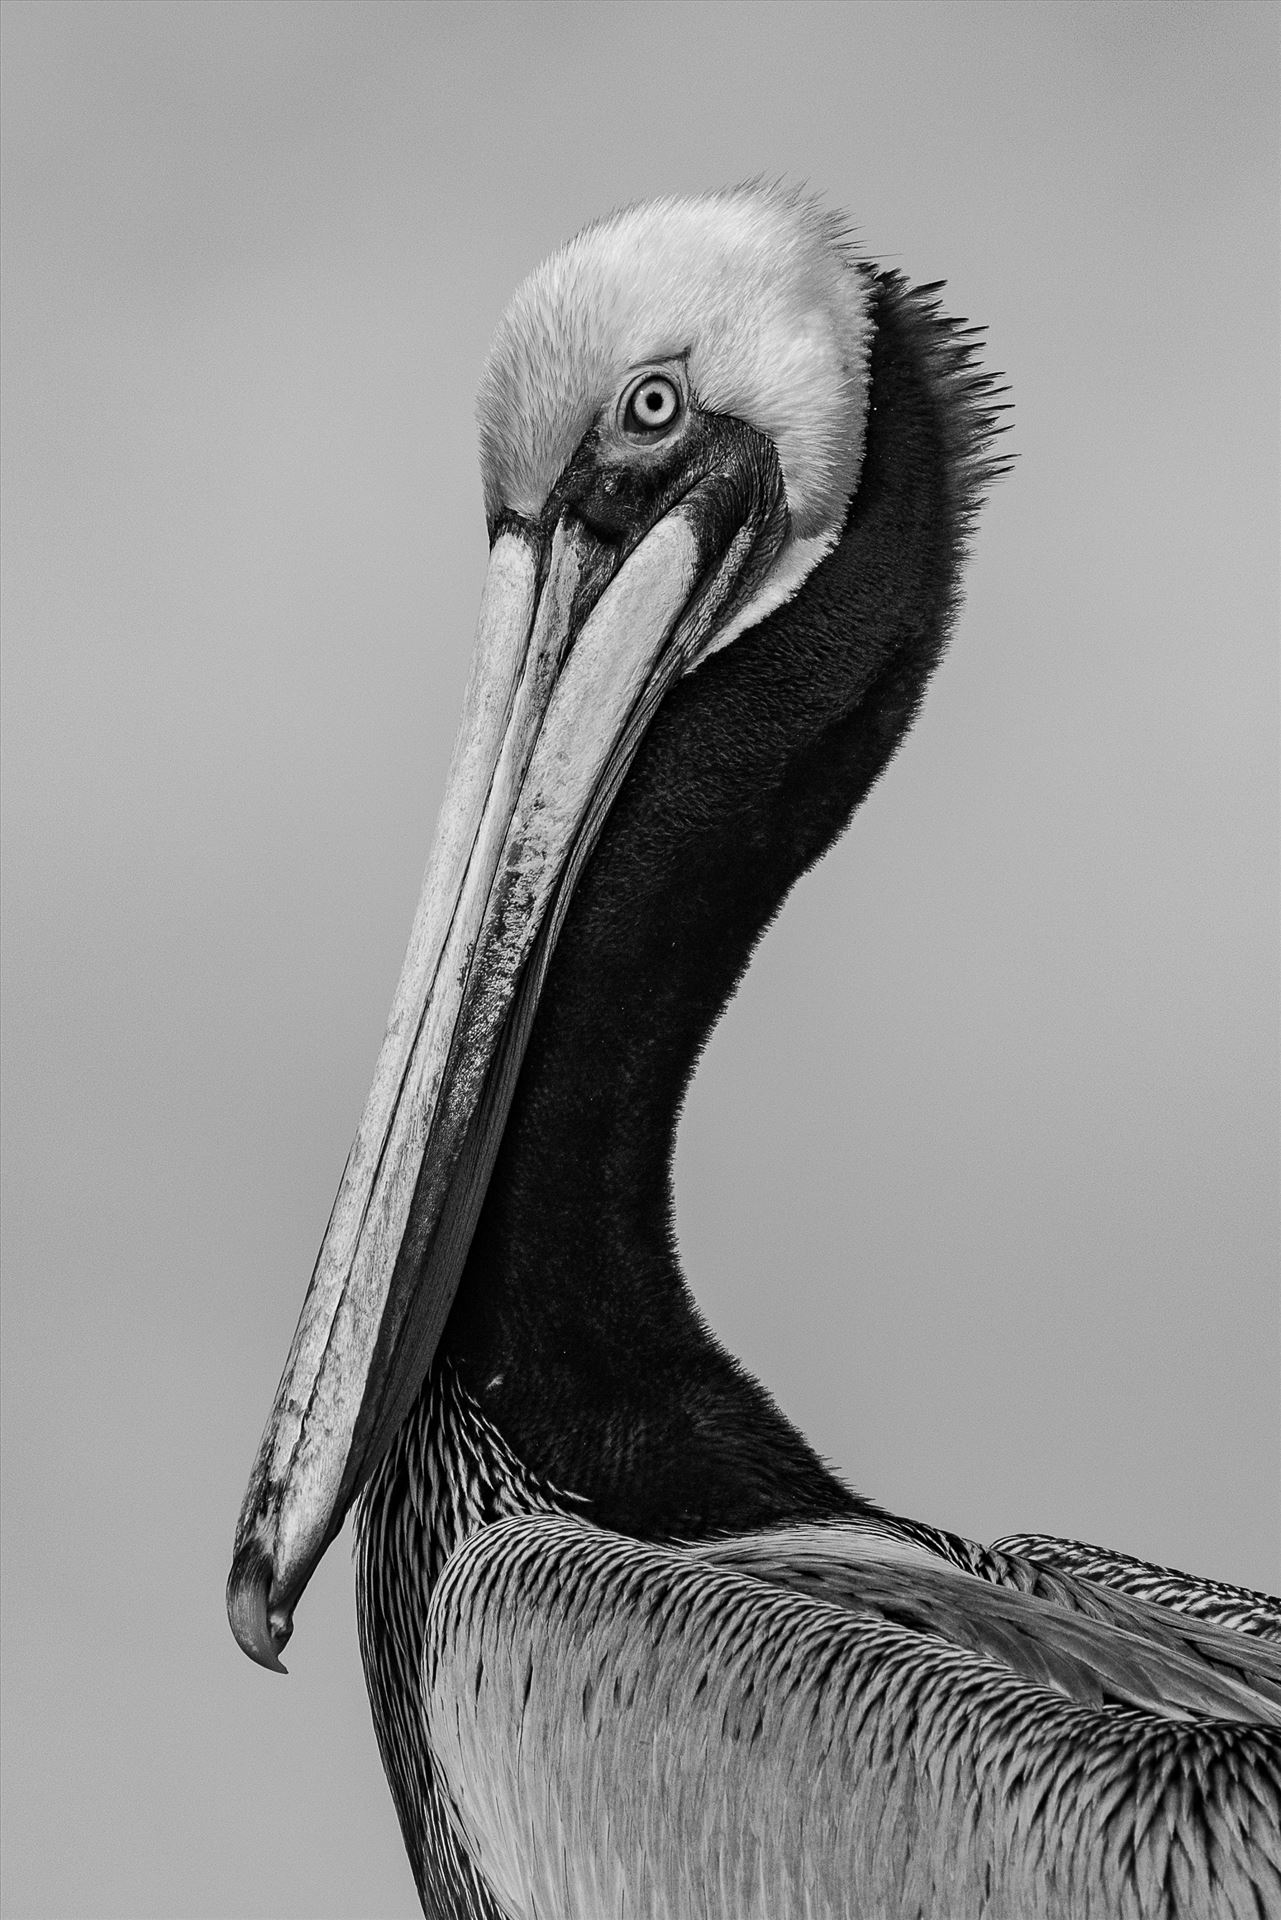 Portrait of K15, a Brown Pelican - Brown Pelican in monochrome by Denise Buckley Crawford